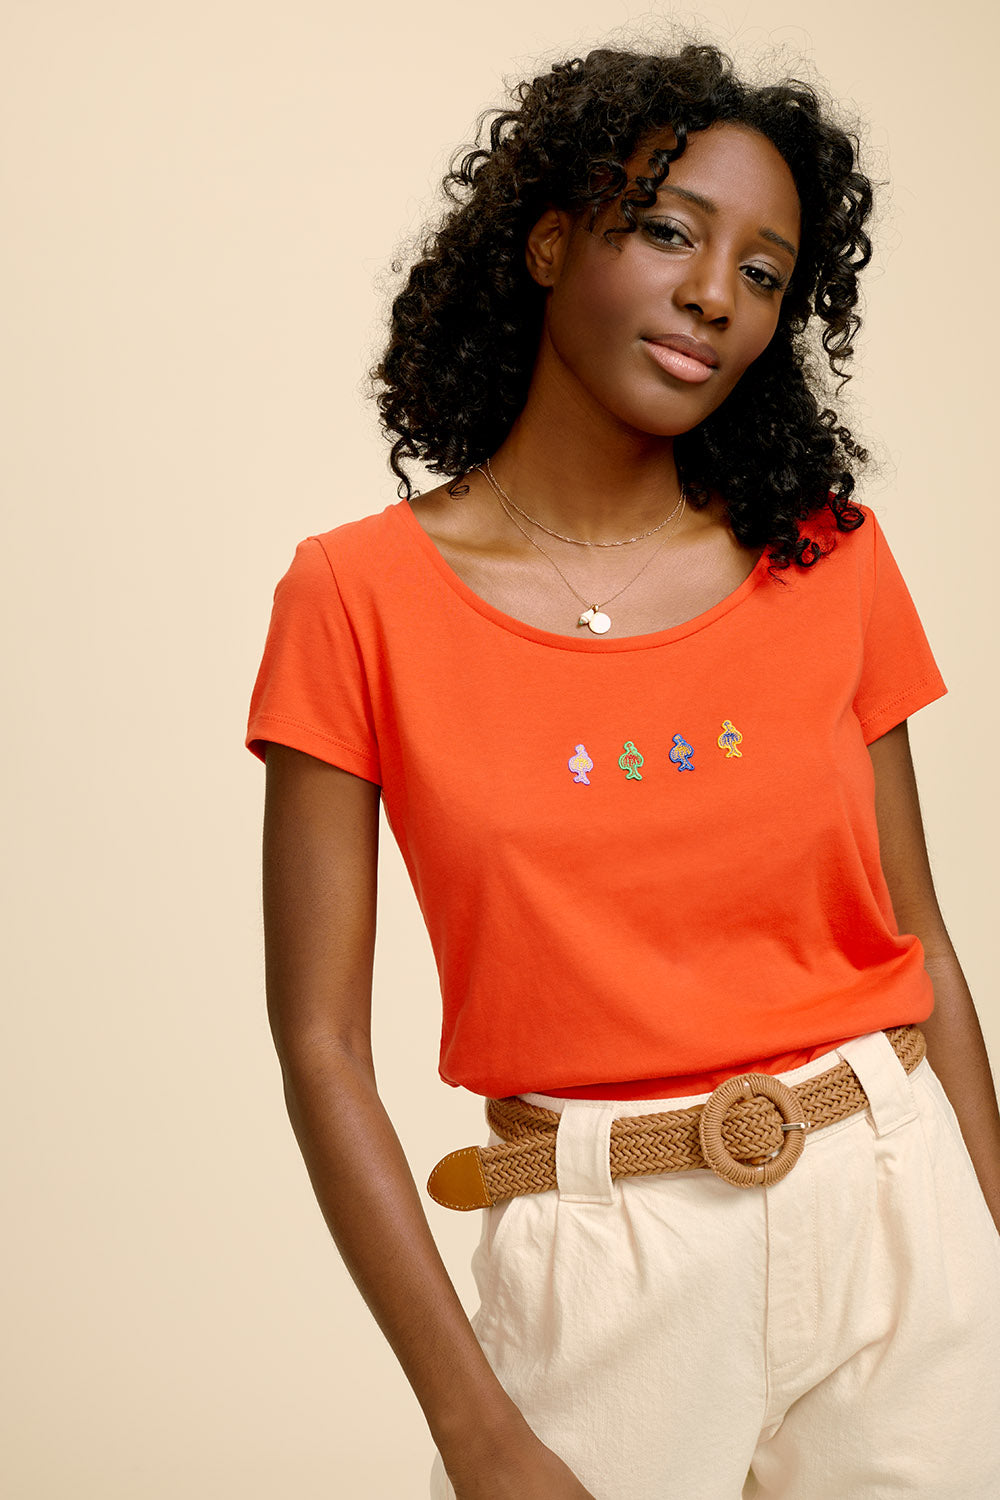 MALIA - T-shirt orange sanguine badges danseuses brodées